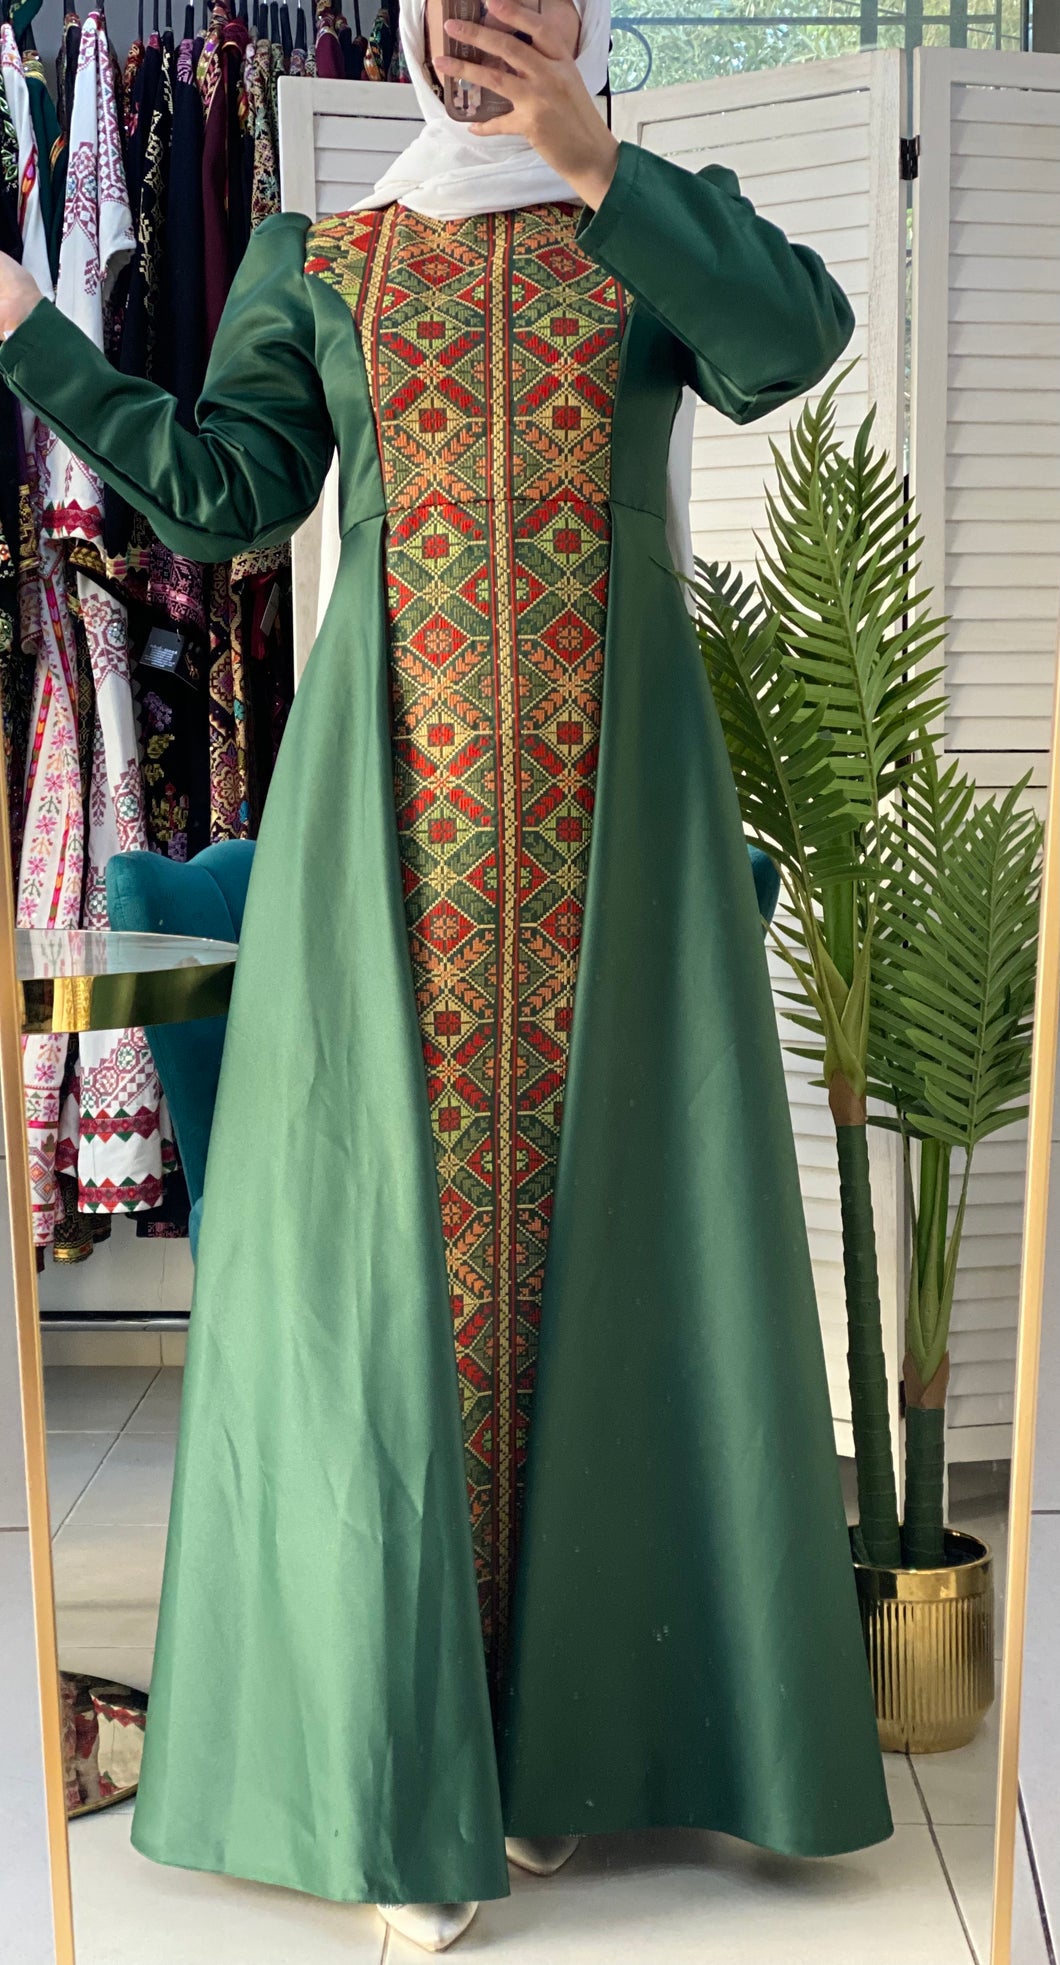 Stunning Green Cloche Satin All Long Embroidered Dress